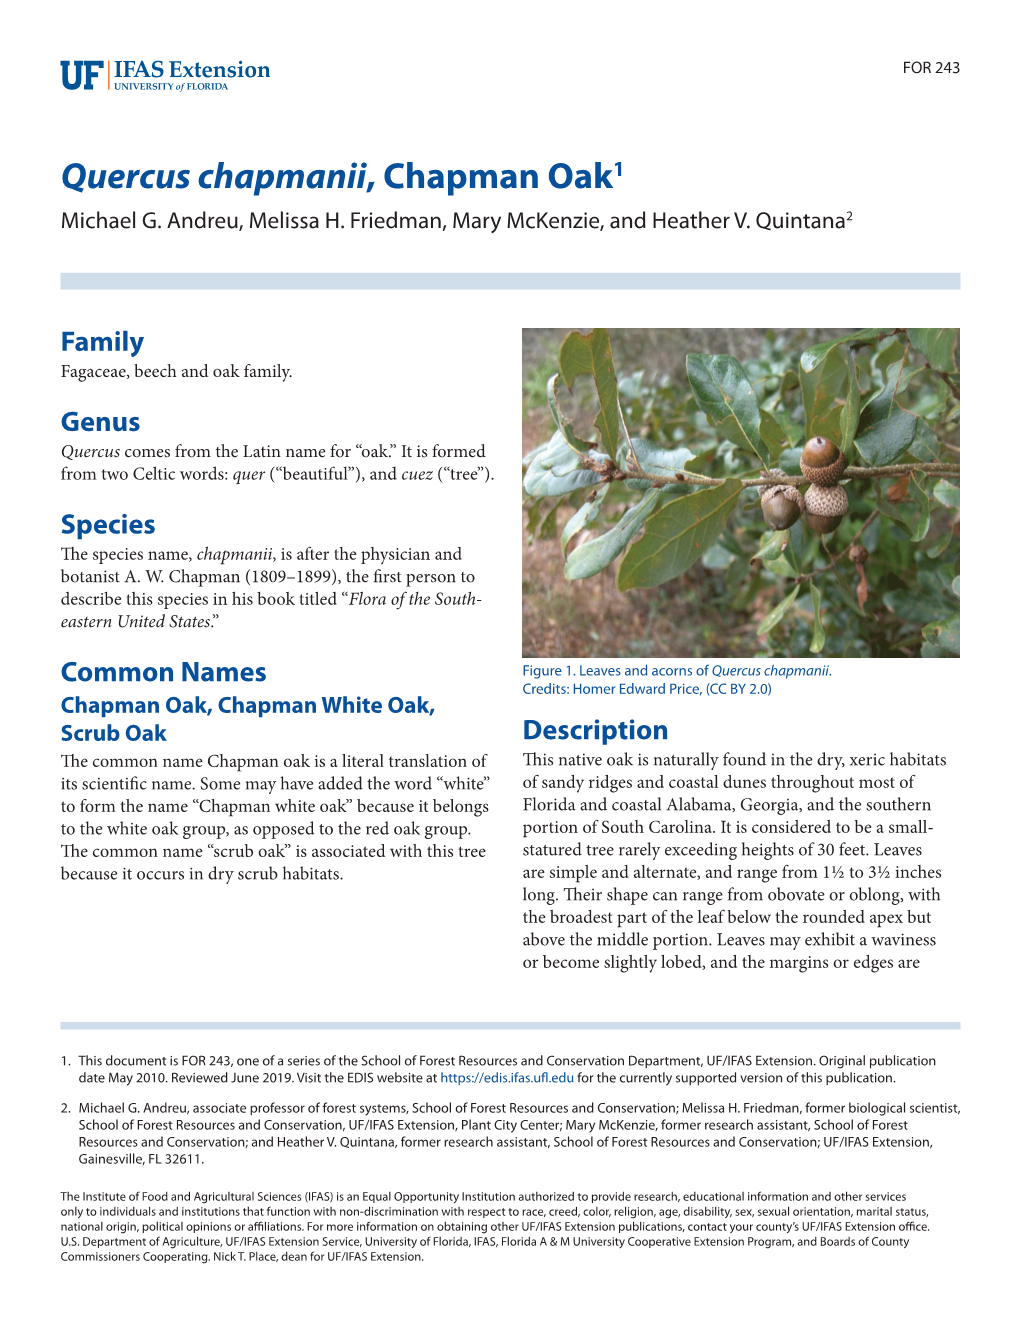 Quercus Chapmanii, Chapman Oak1 Michael G